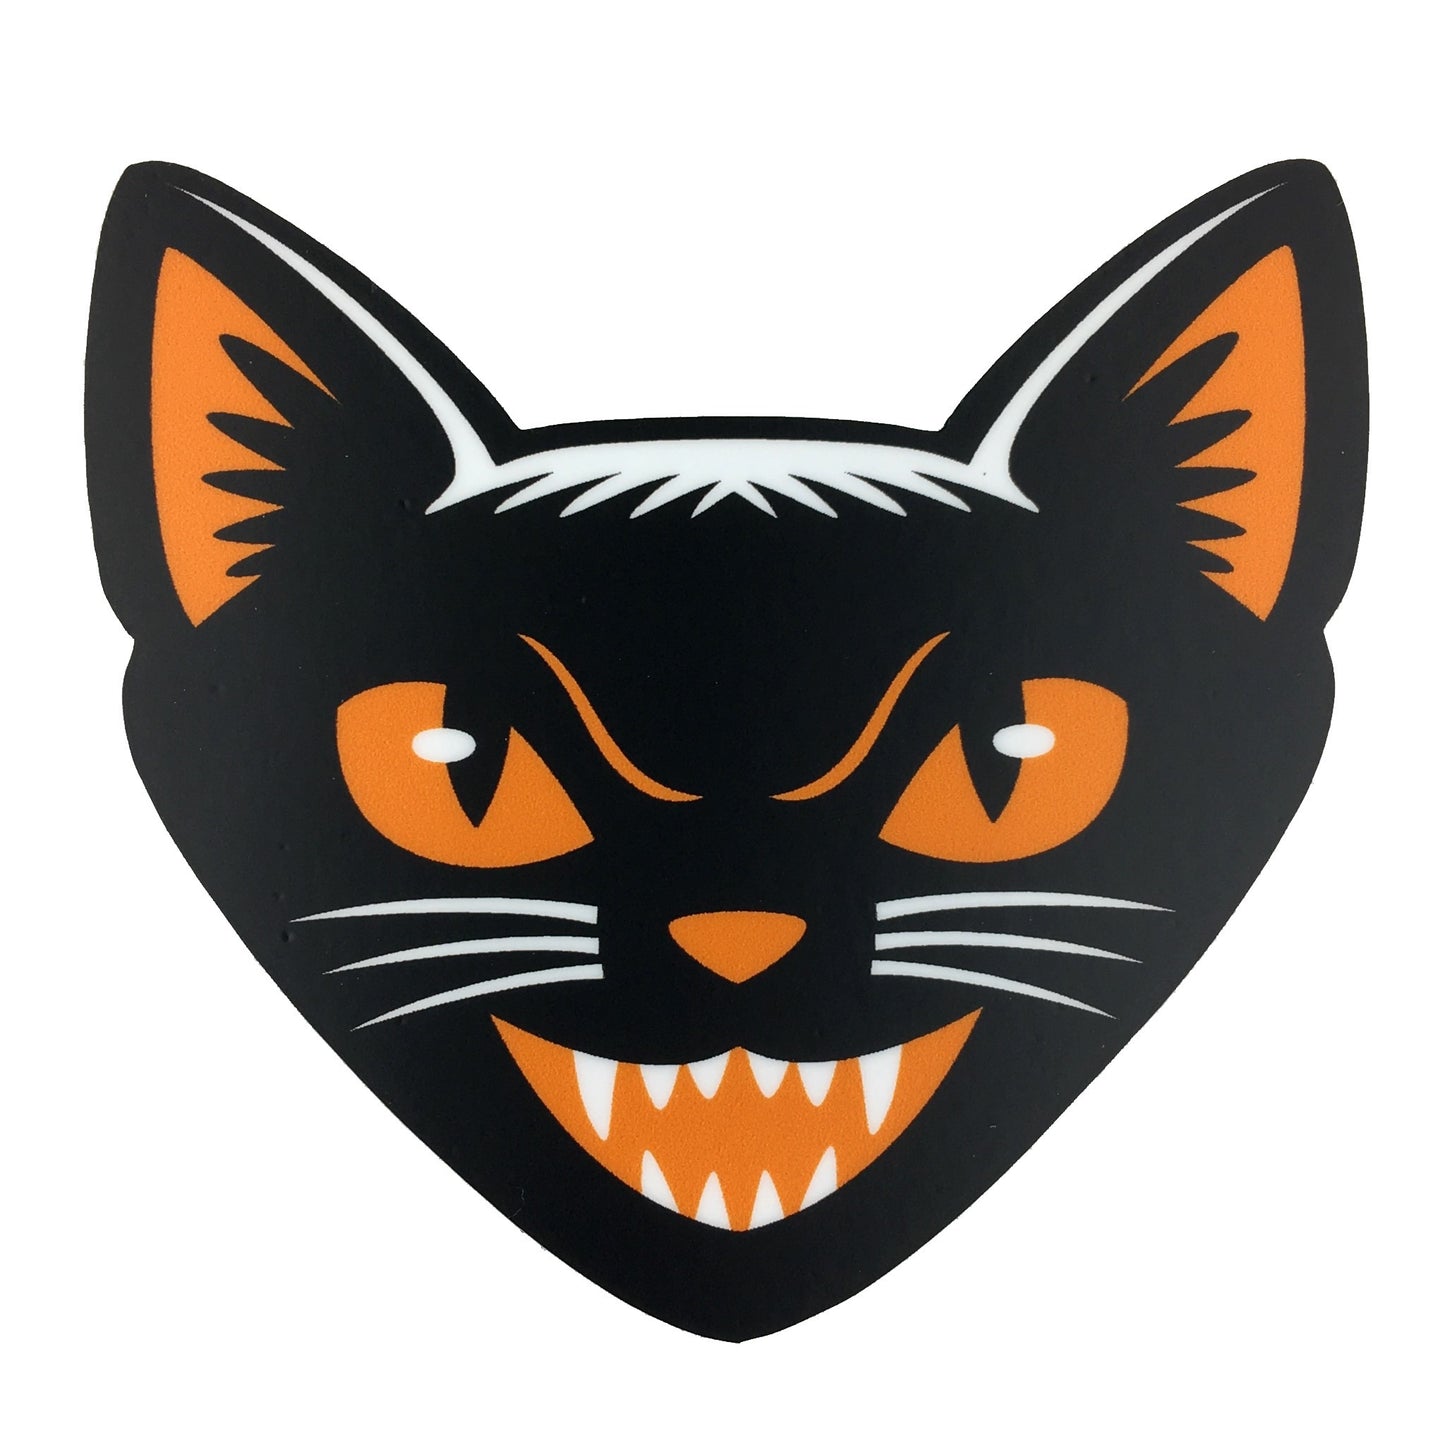 Halloween black cat retro/vintage style, by Monsterologist